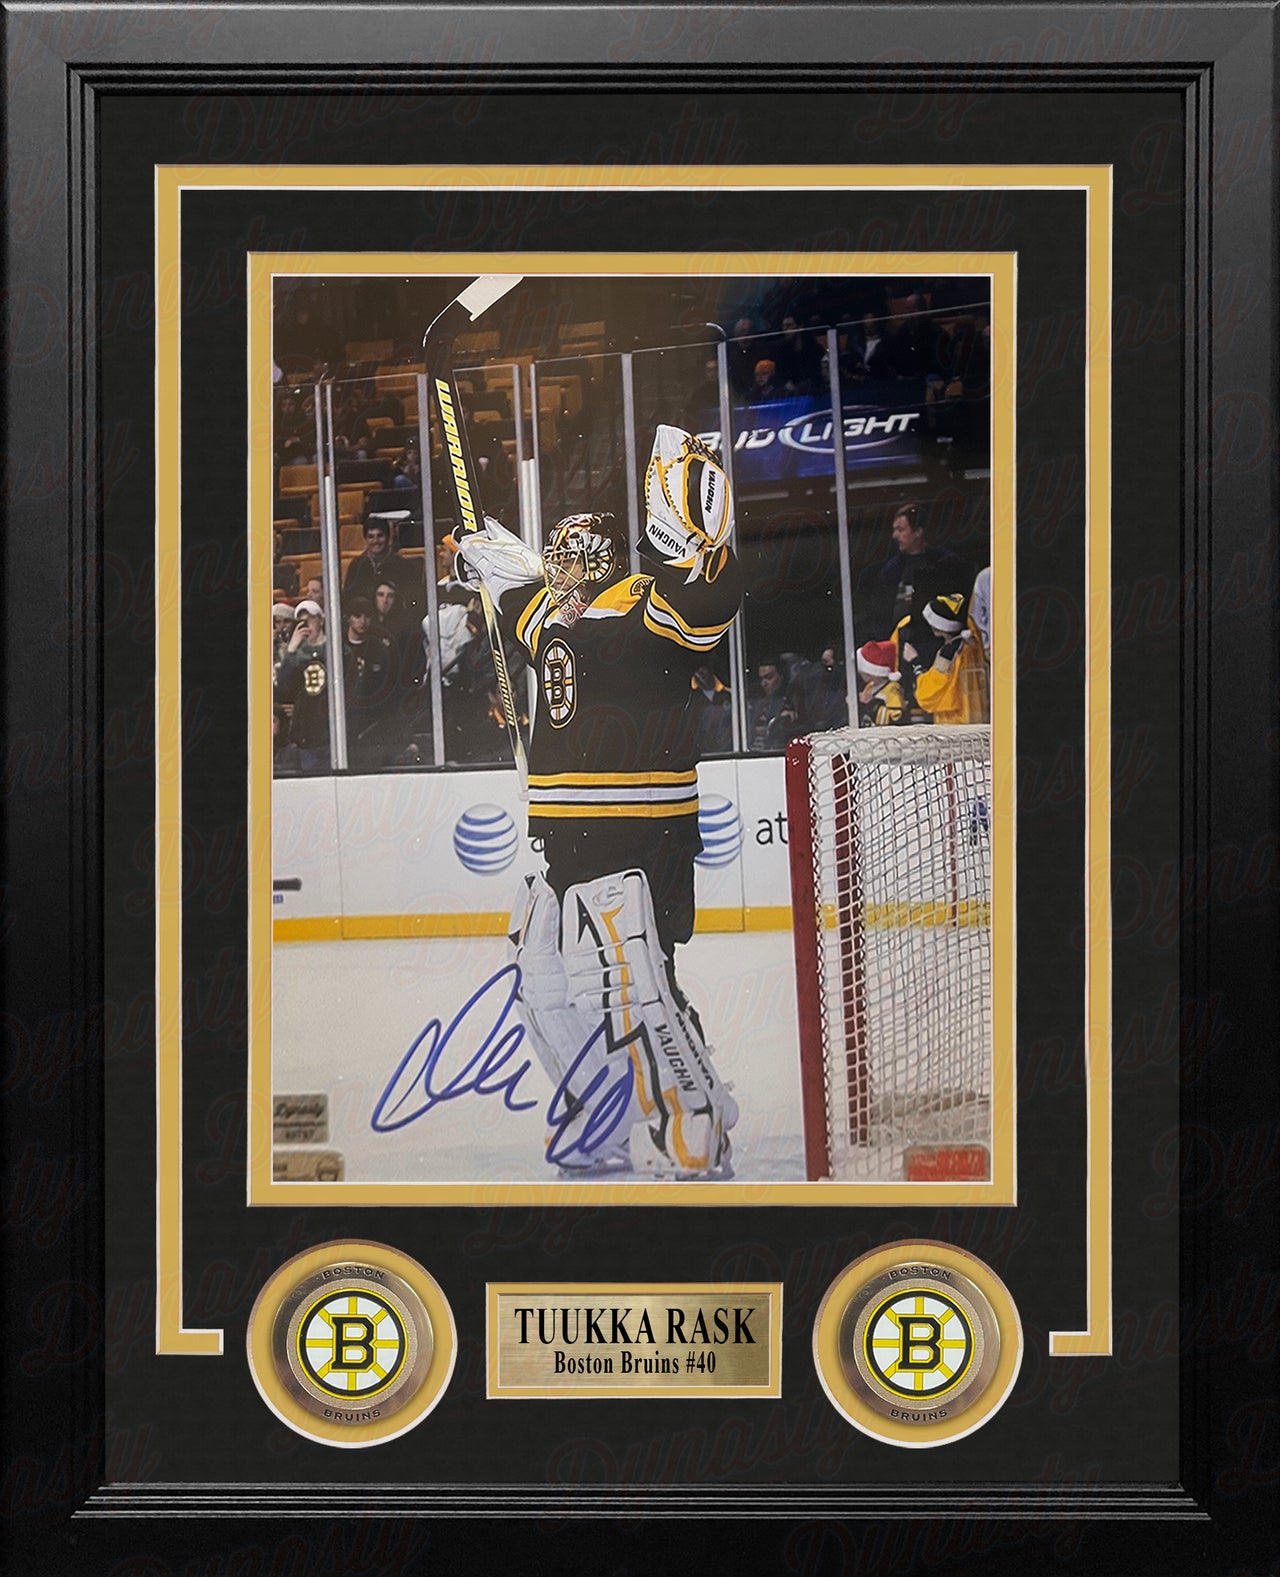 Tuukka Rask Arms Up Boston Bruins Autographed 8" x 10" Framed Hockey Photo